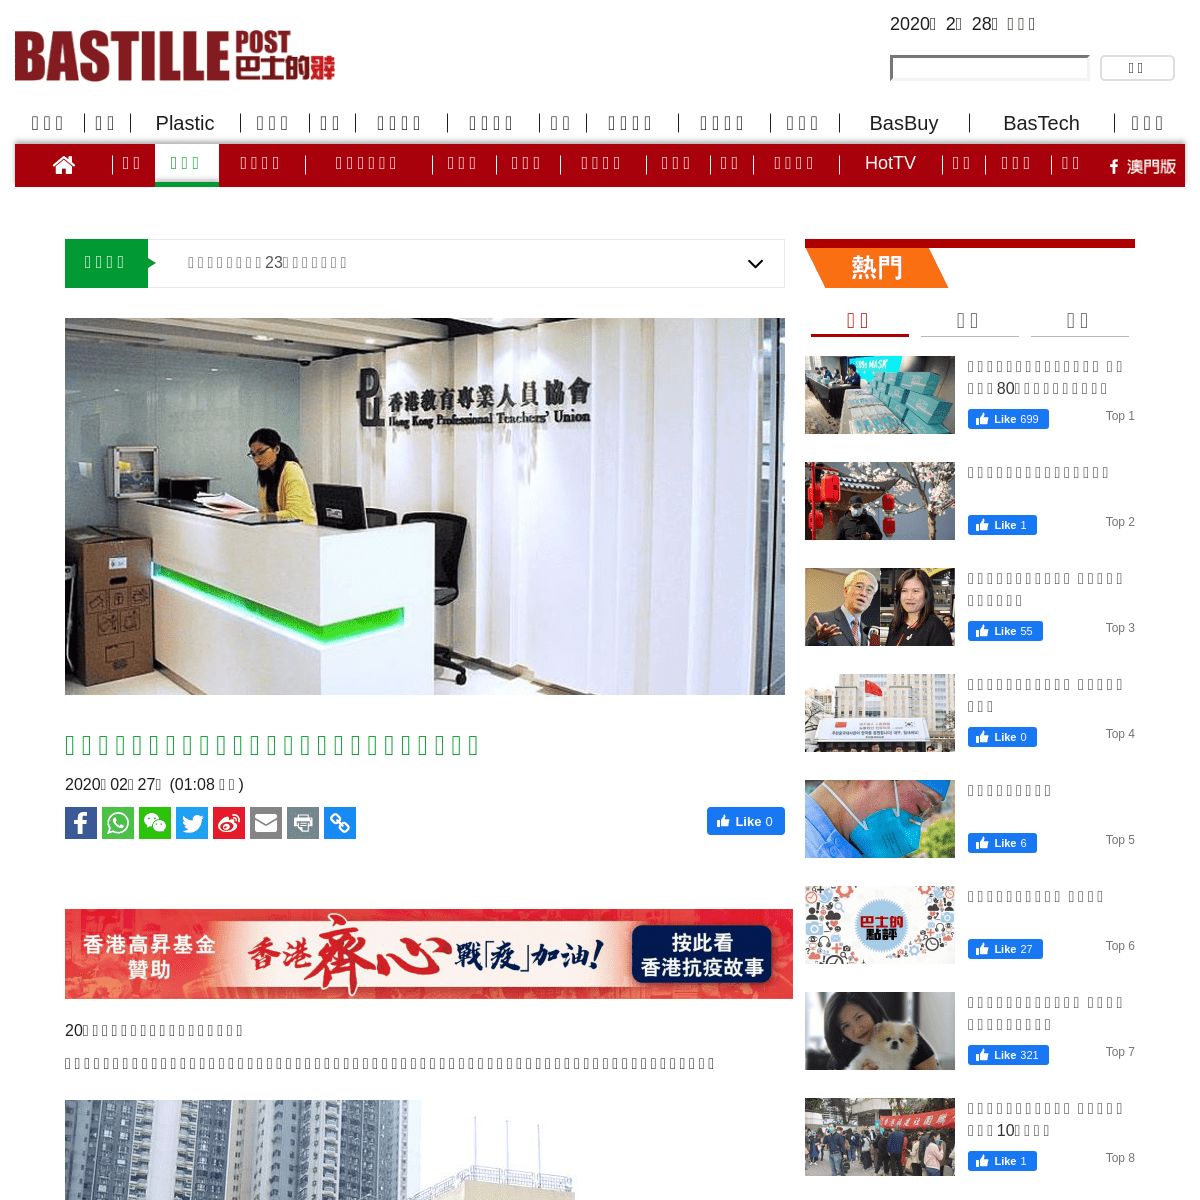 A complete backup of www.bastillepost.com/hongkong/article/5989040